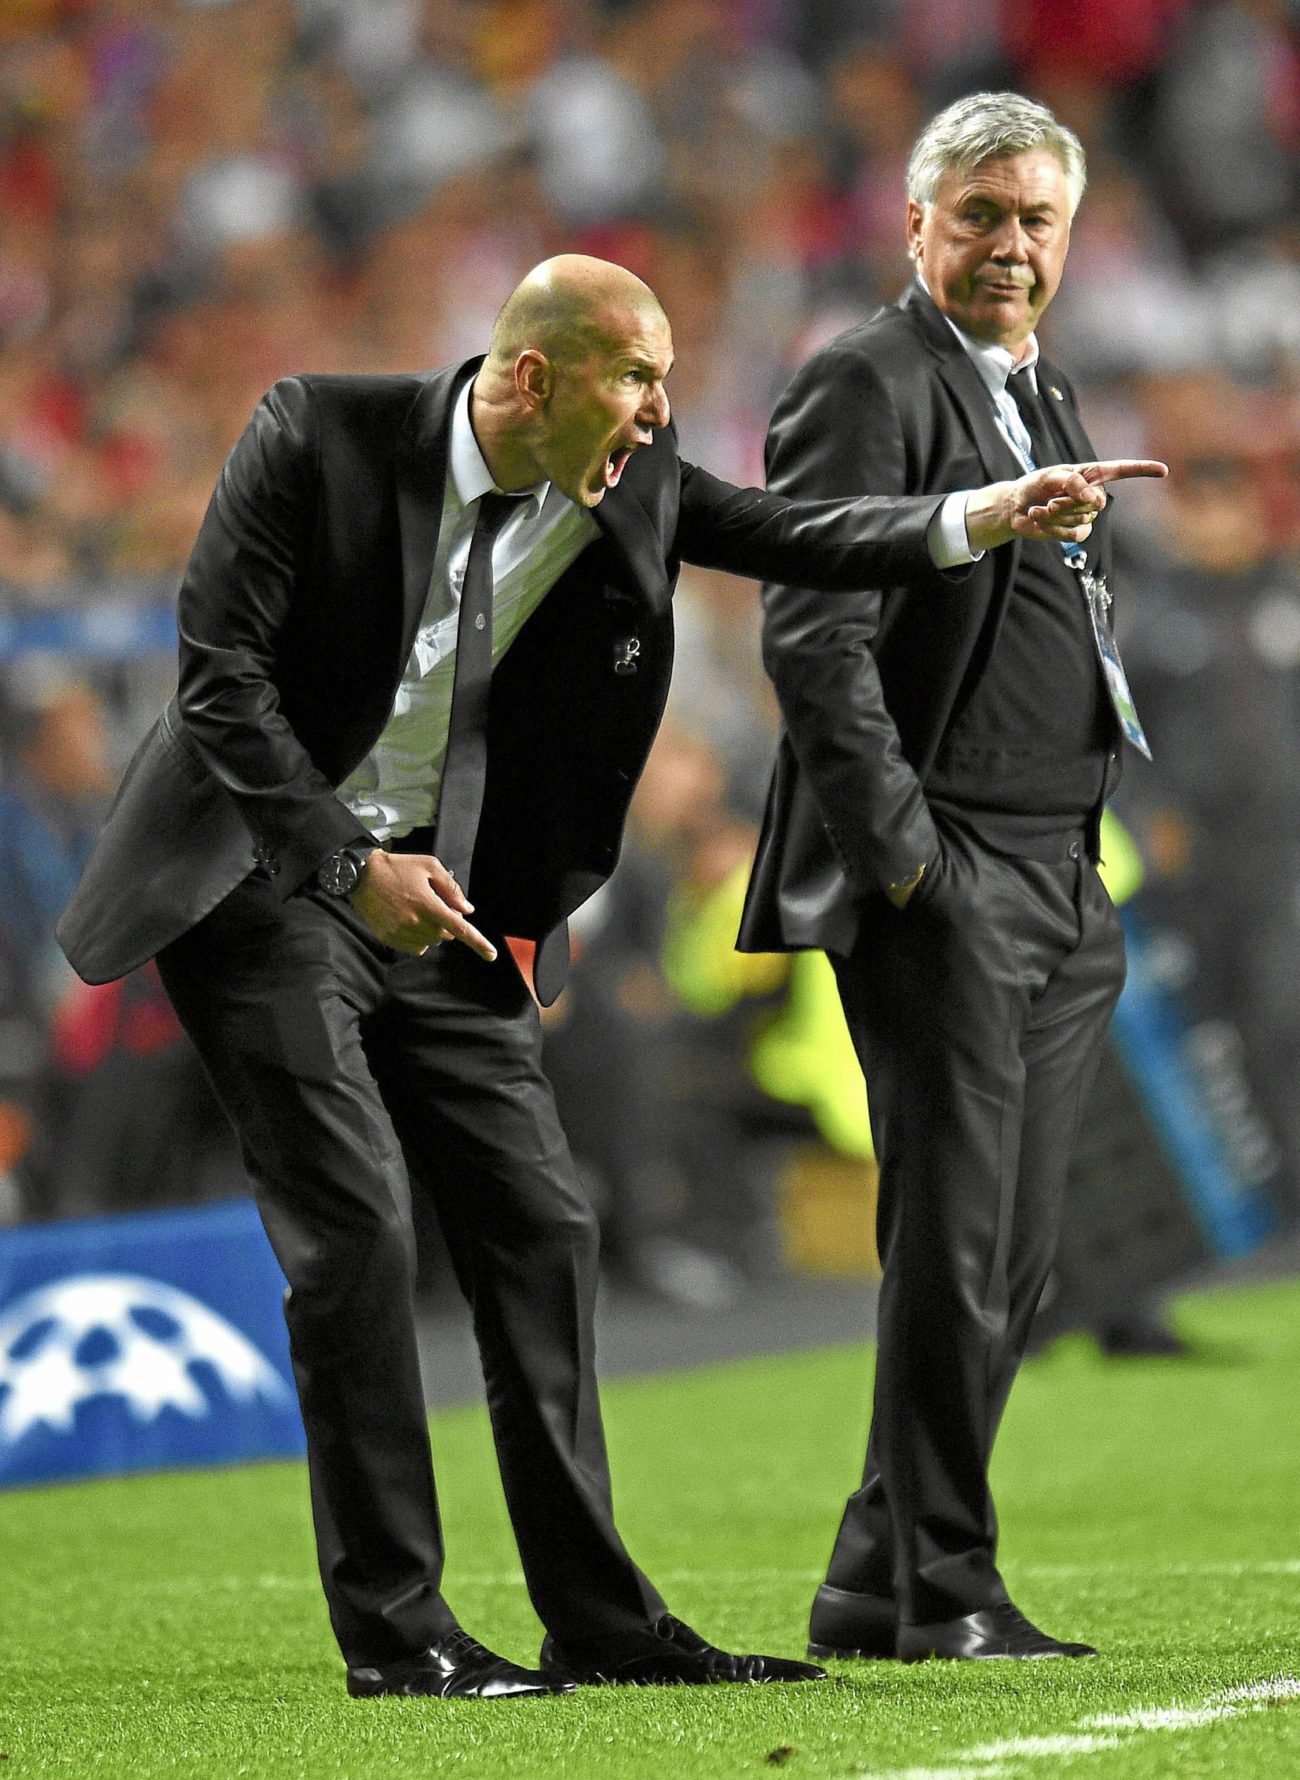 Zidane ya apuntaba en su época al lado de Ancelotti. Esta foto era la...